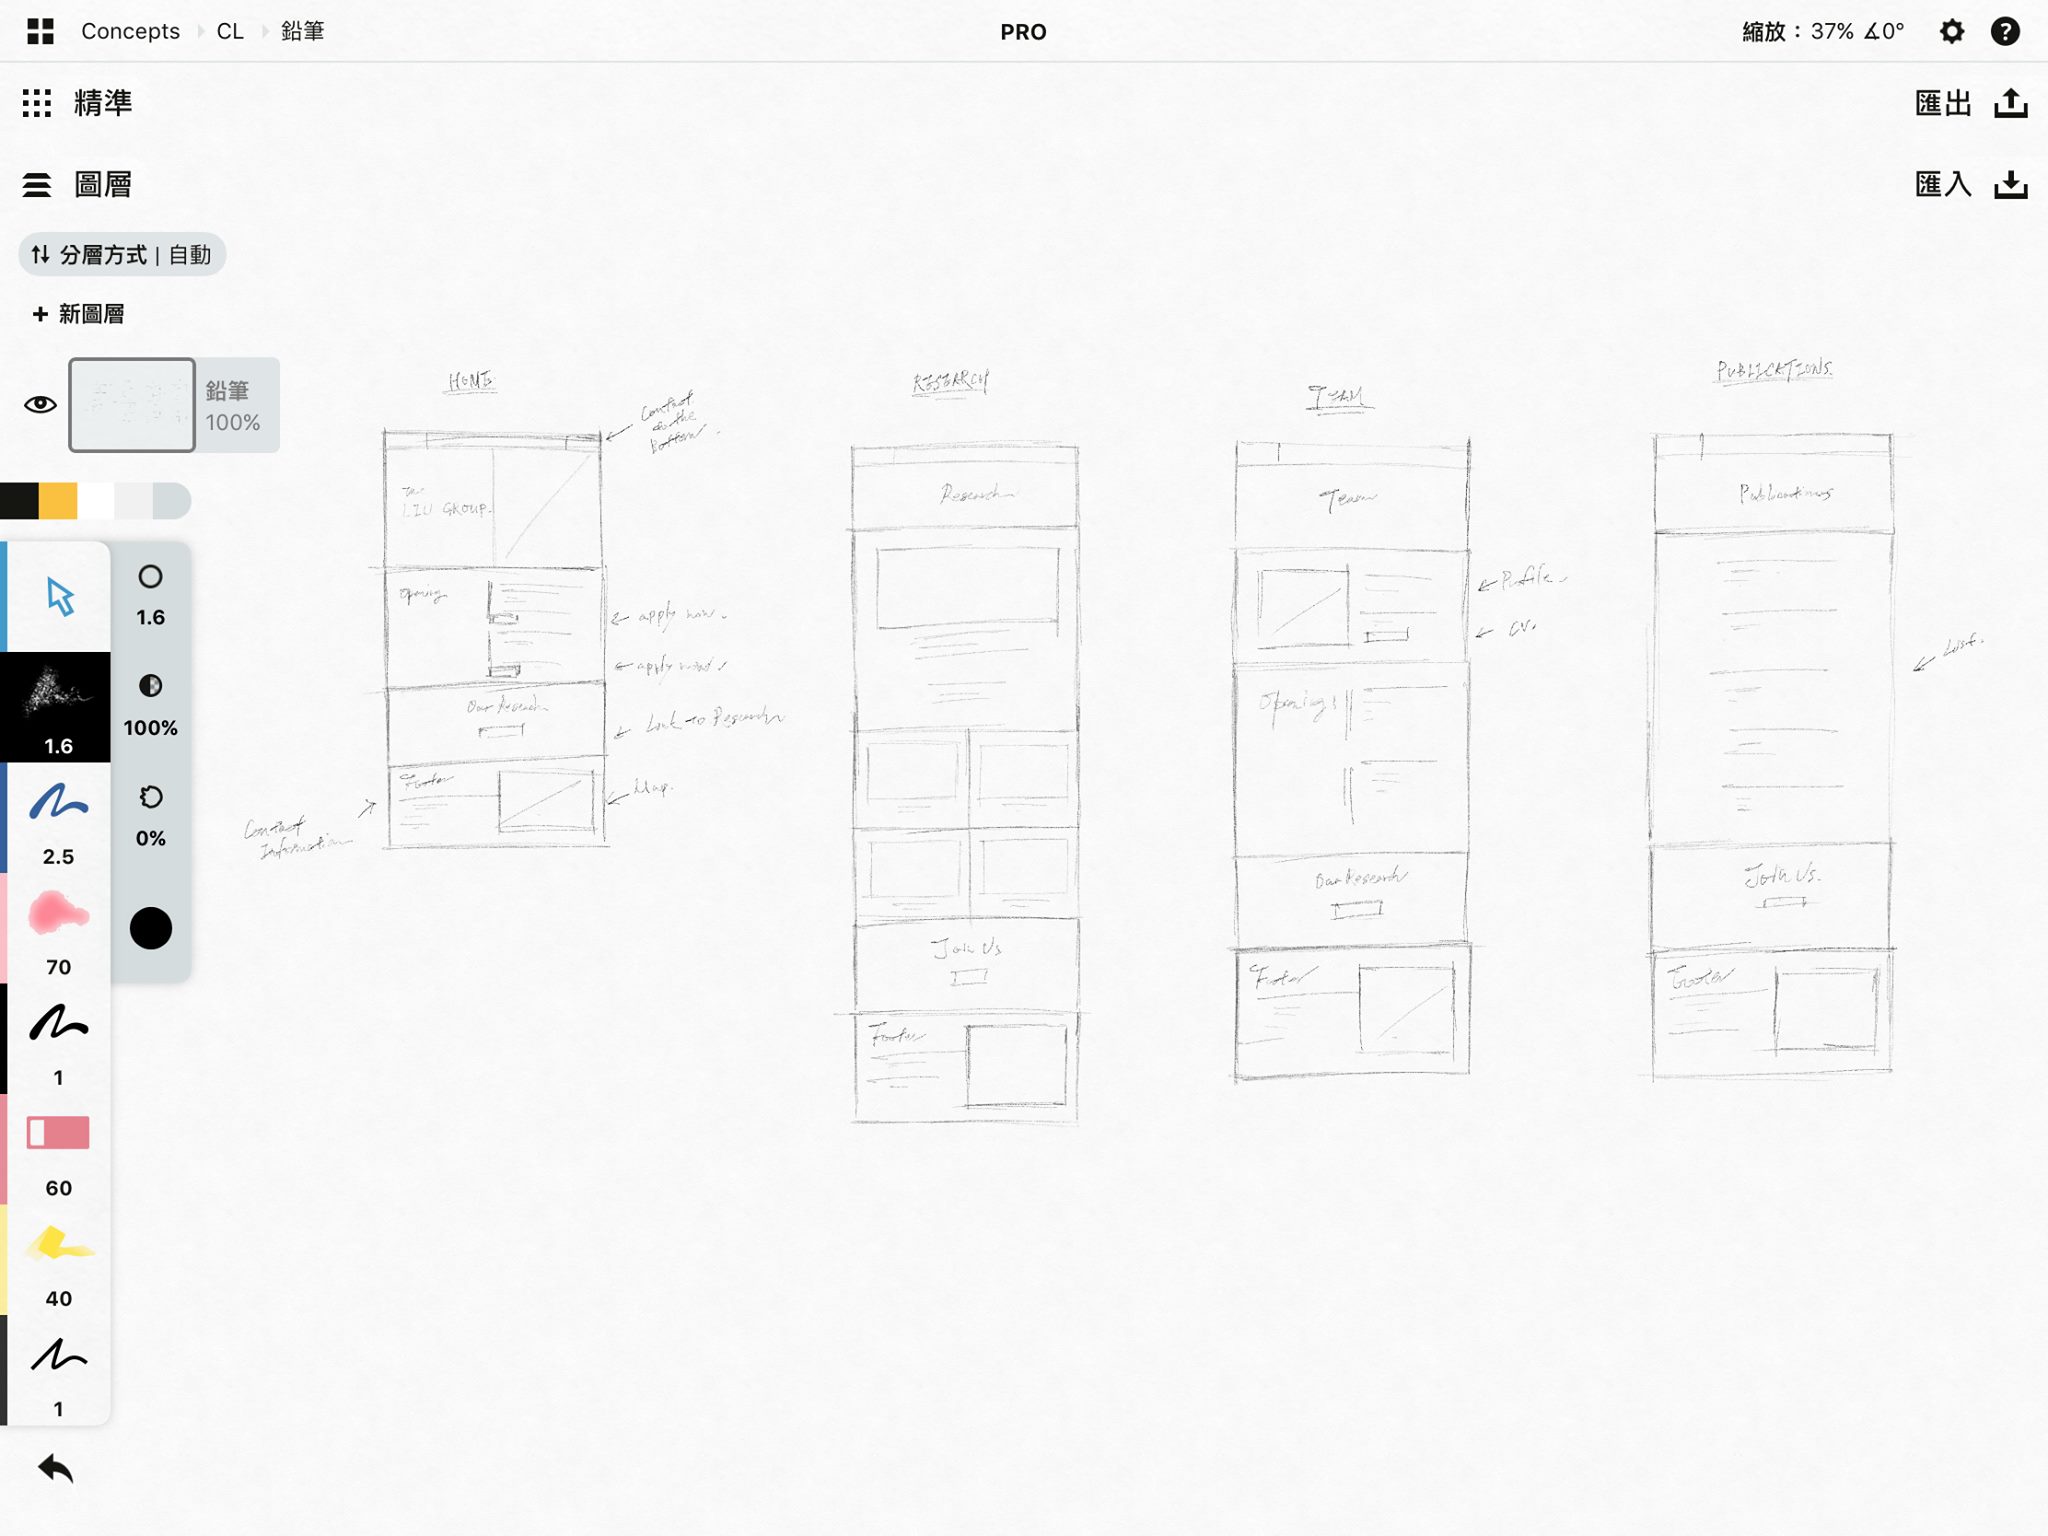 使用 iPad Pro 搭配 Apple Pencil，使用 Concepts 軟體所繪製的線稿設計圖